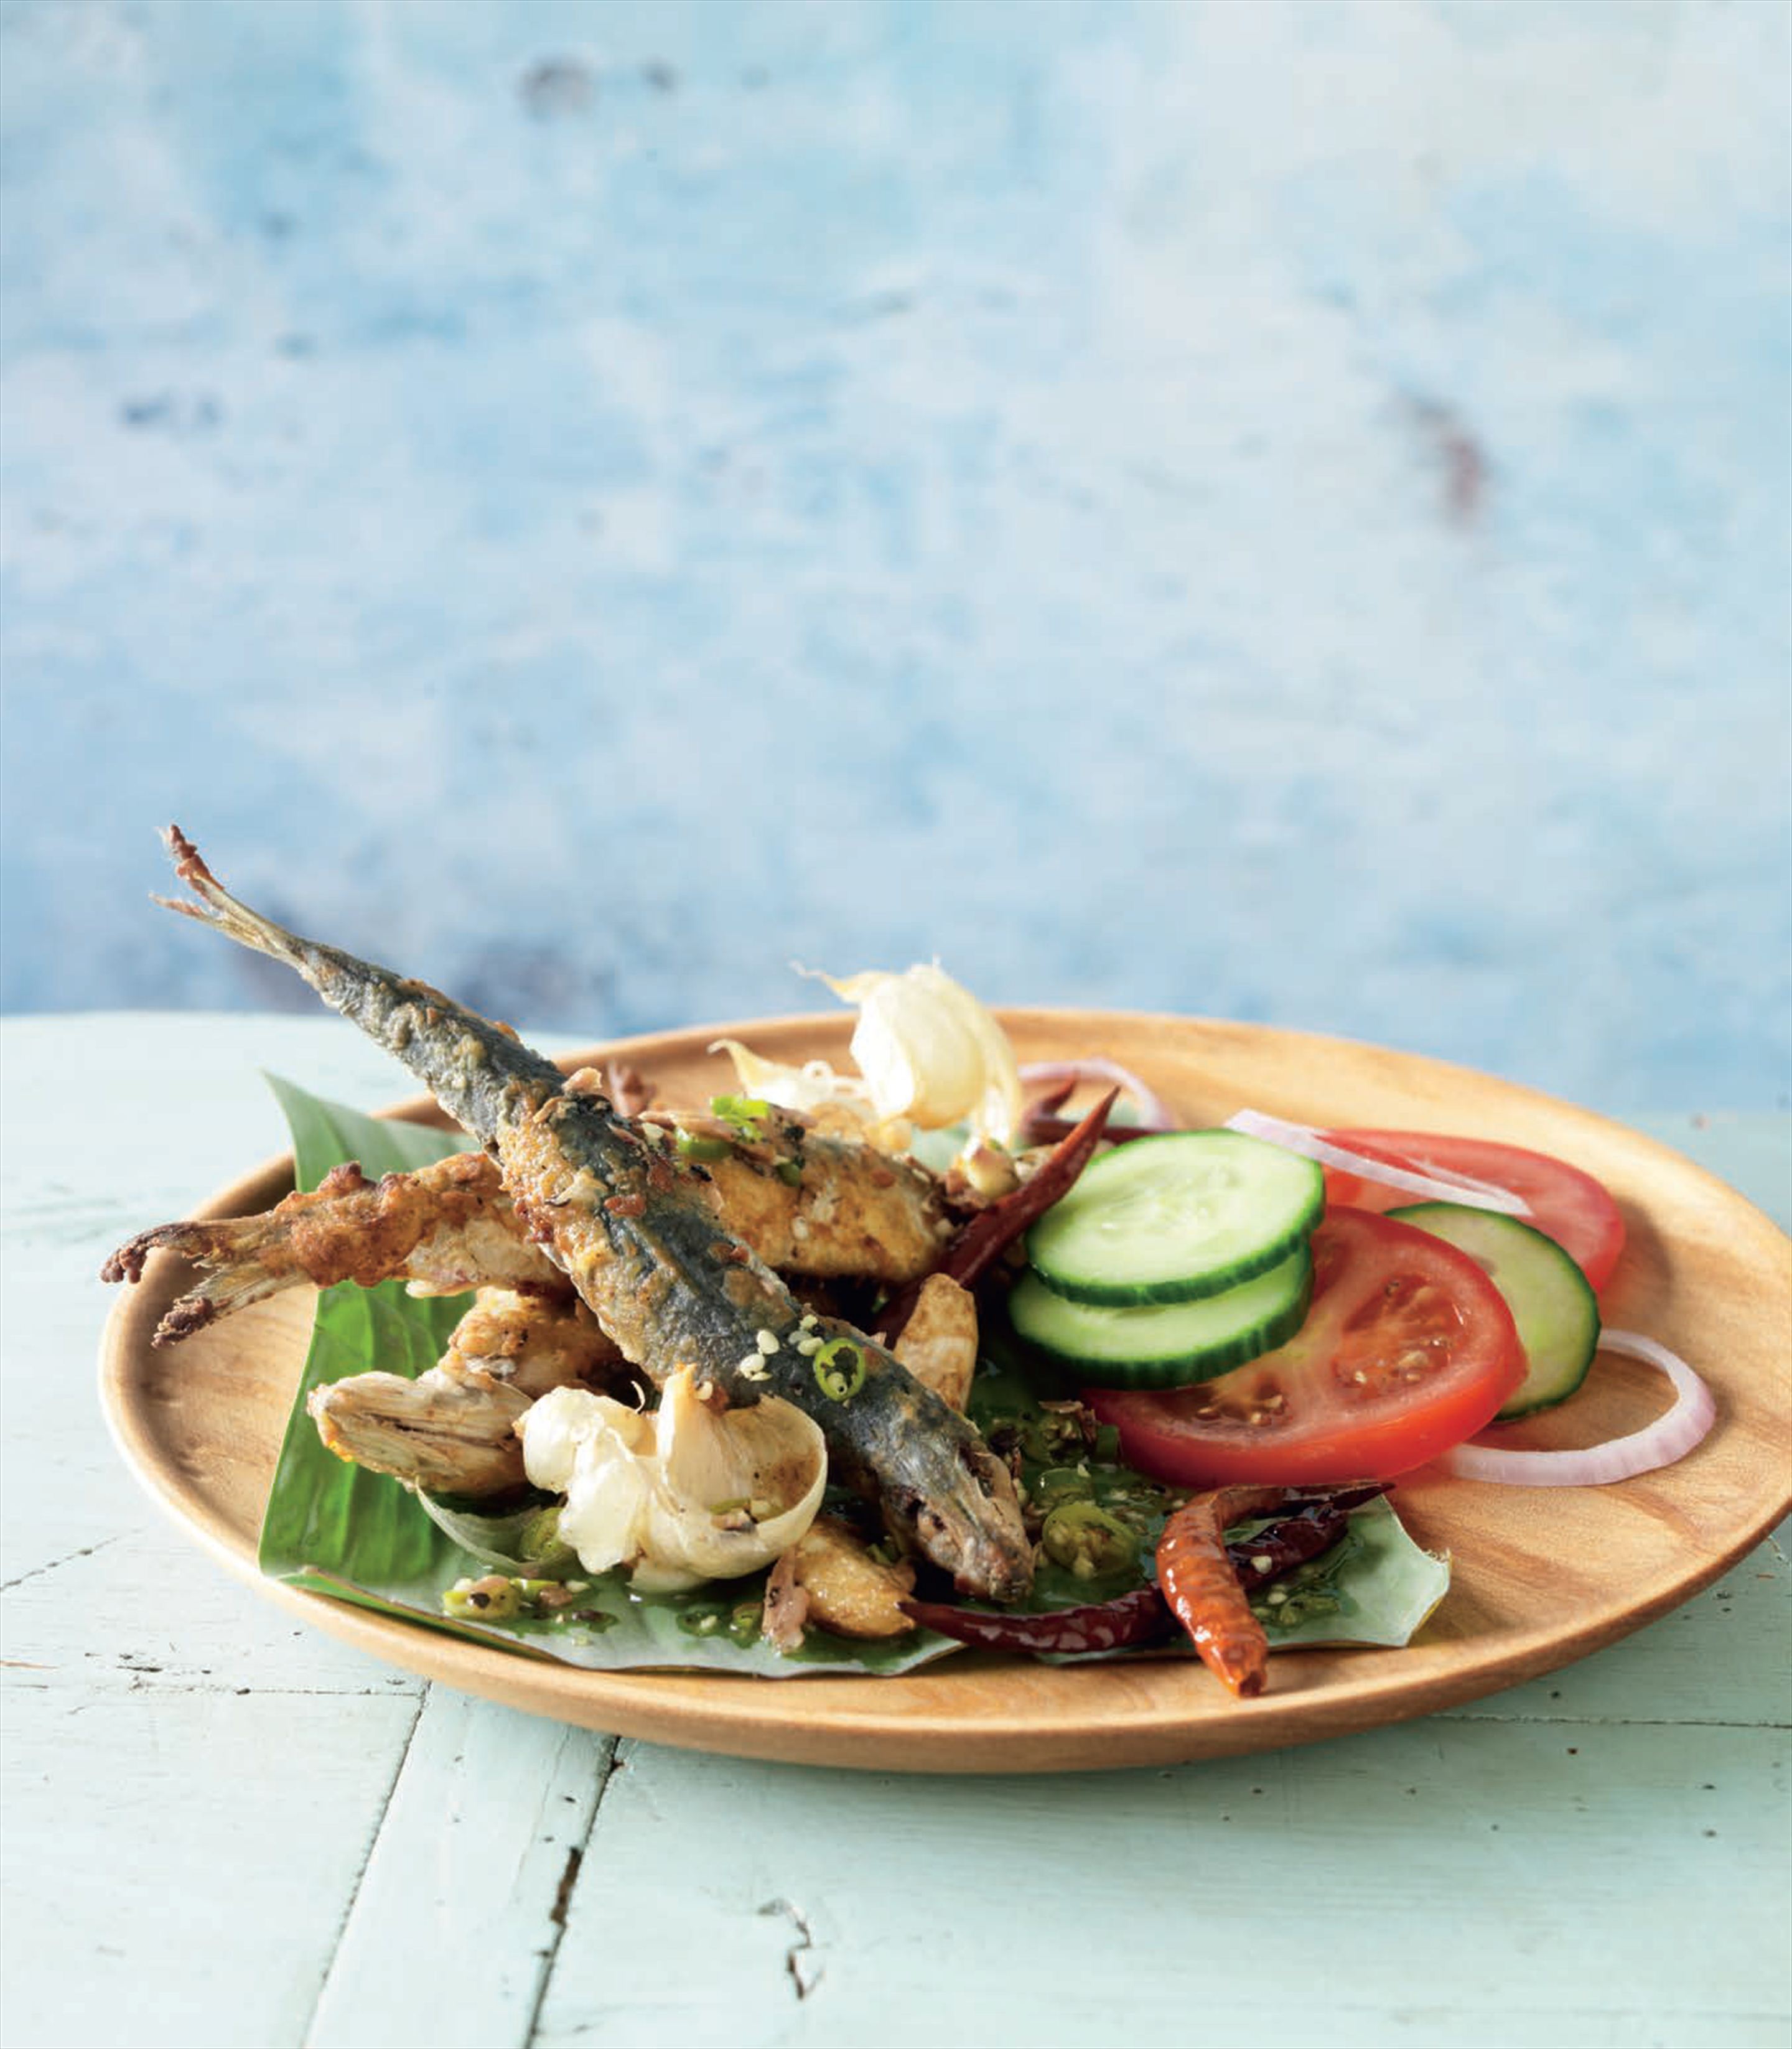 Crisp herrings with a spicy Sri Lankan salad